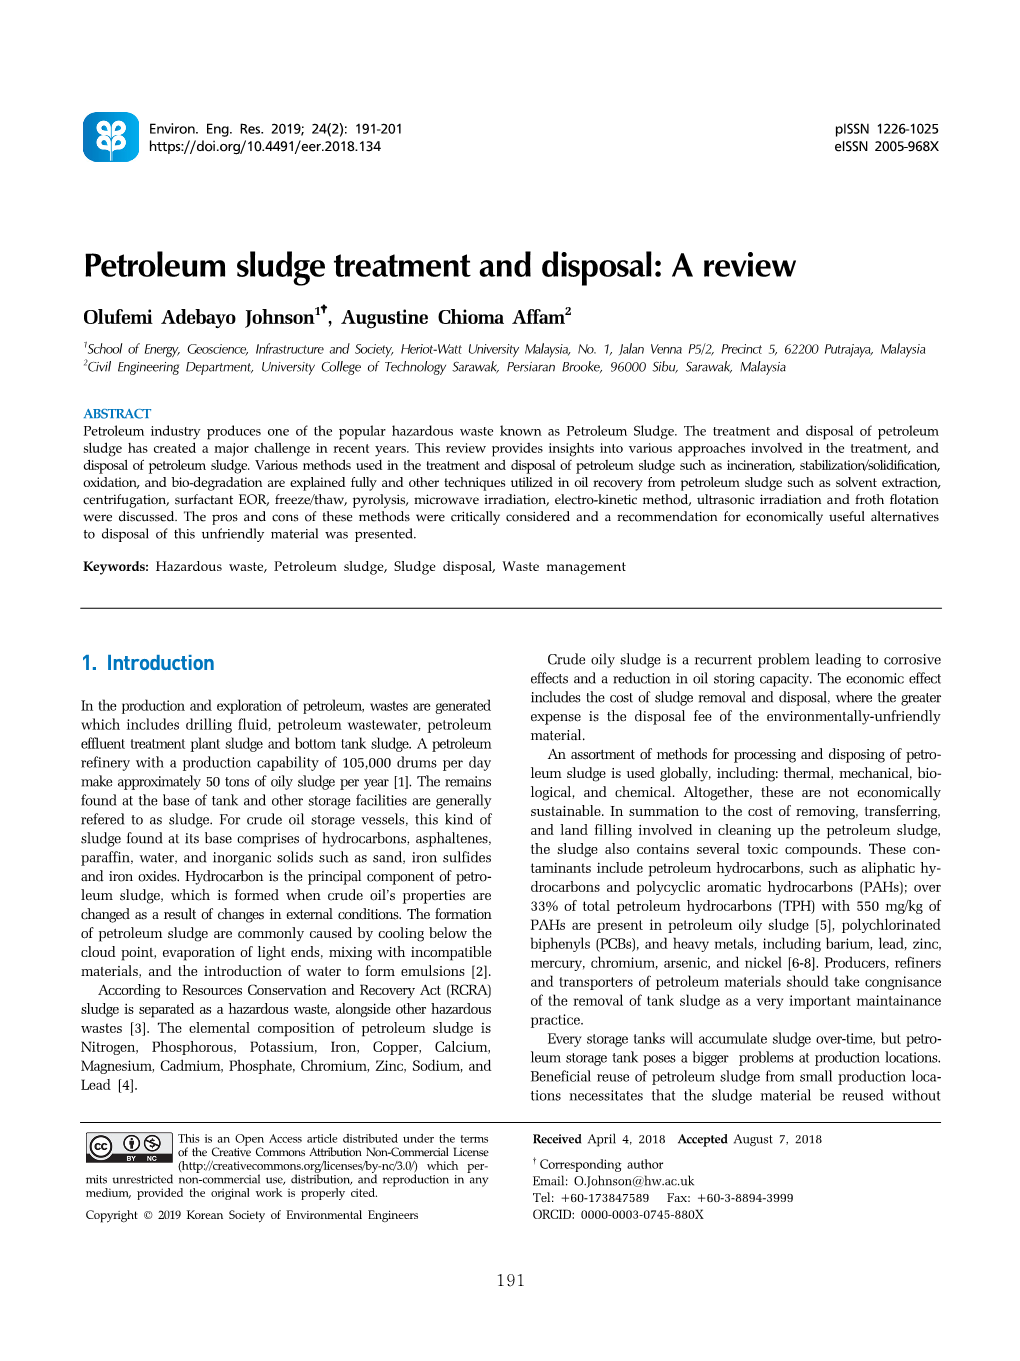 Petroleum Sludge Treatment and Disposal: a Review